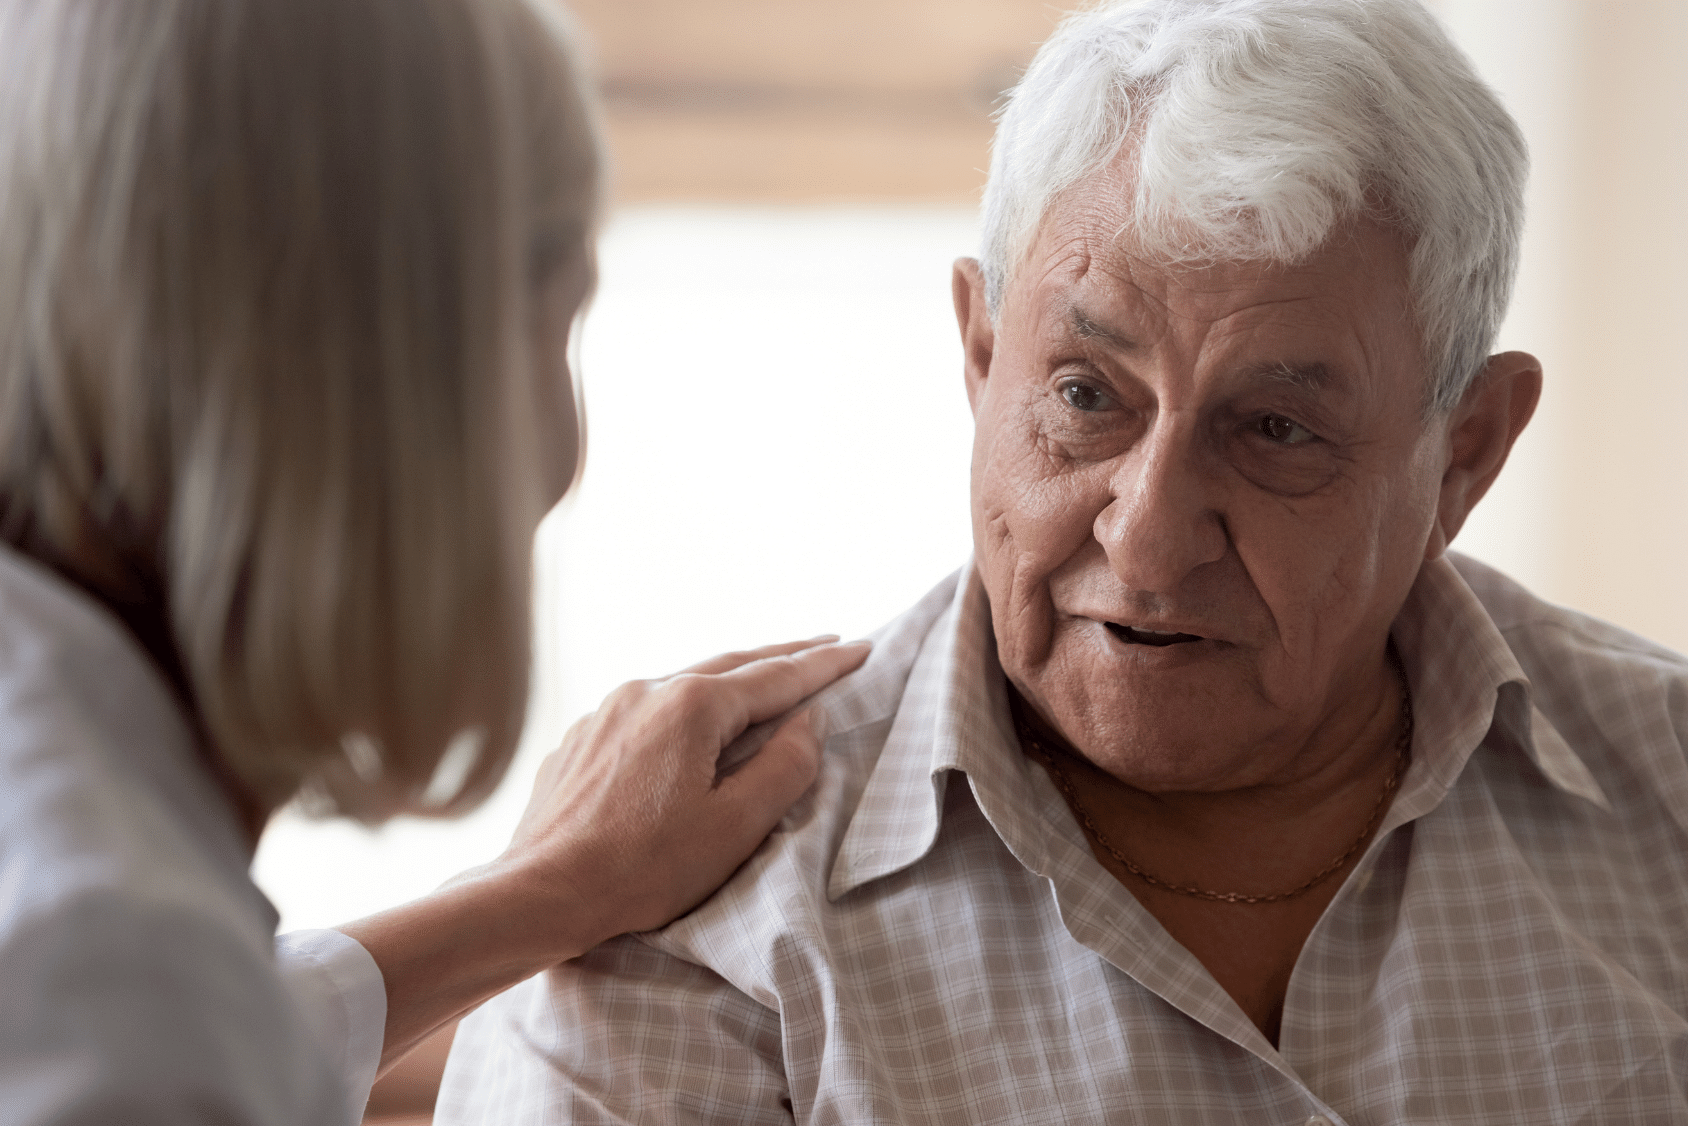 Senior man receives assurance from support worker